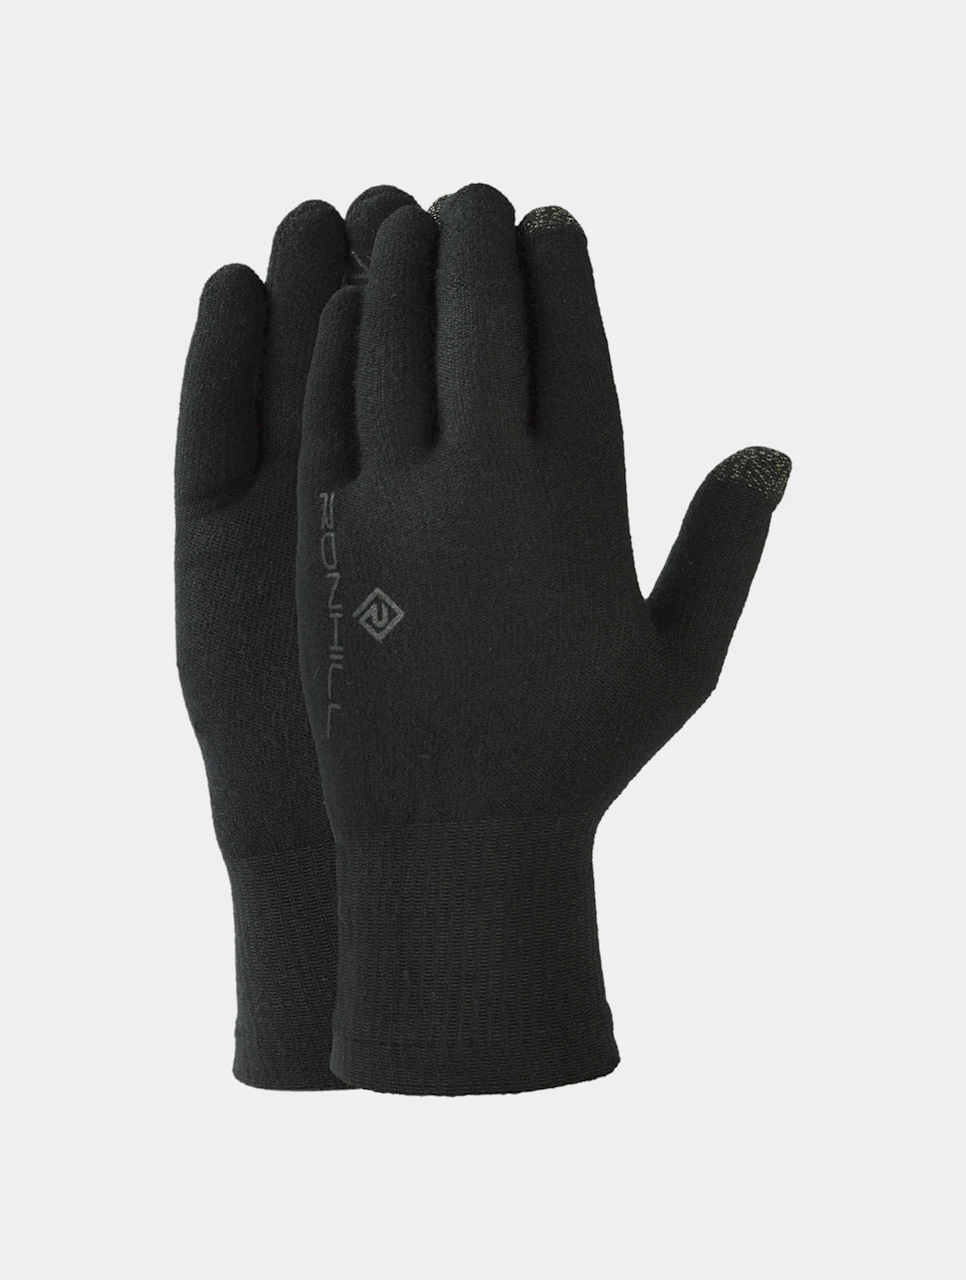 Merino Seamless Glove All Black L